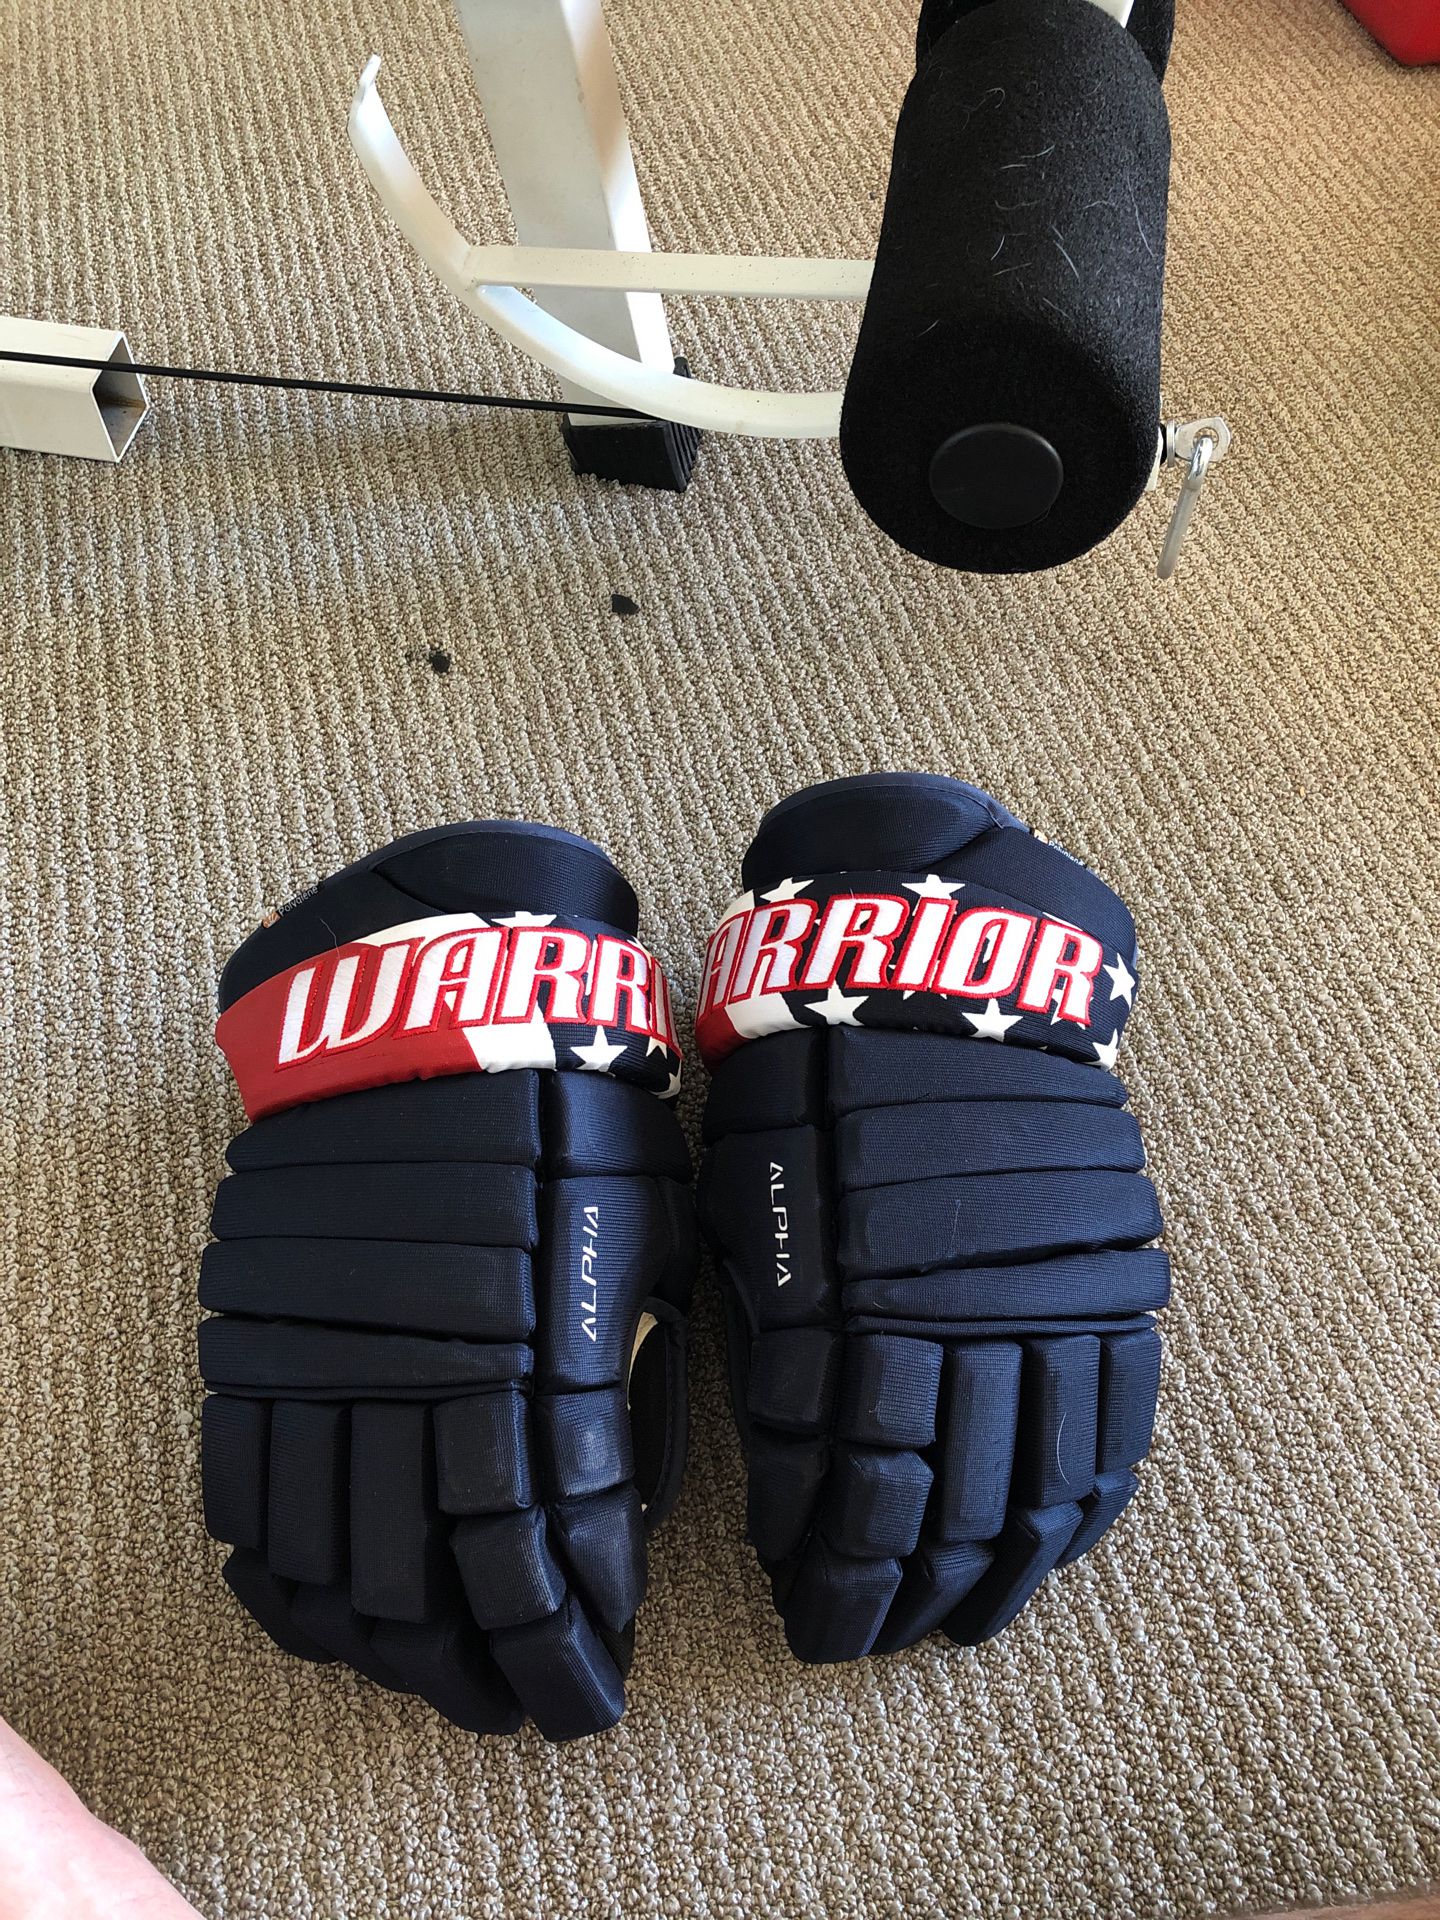 Warrior hockey gloves pro stock custom